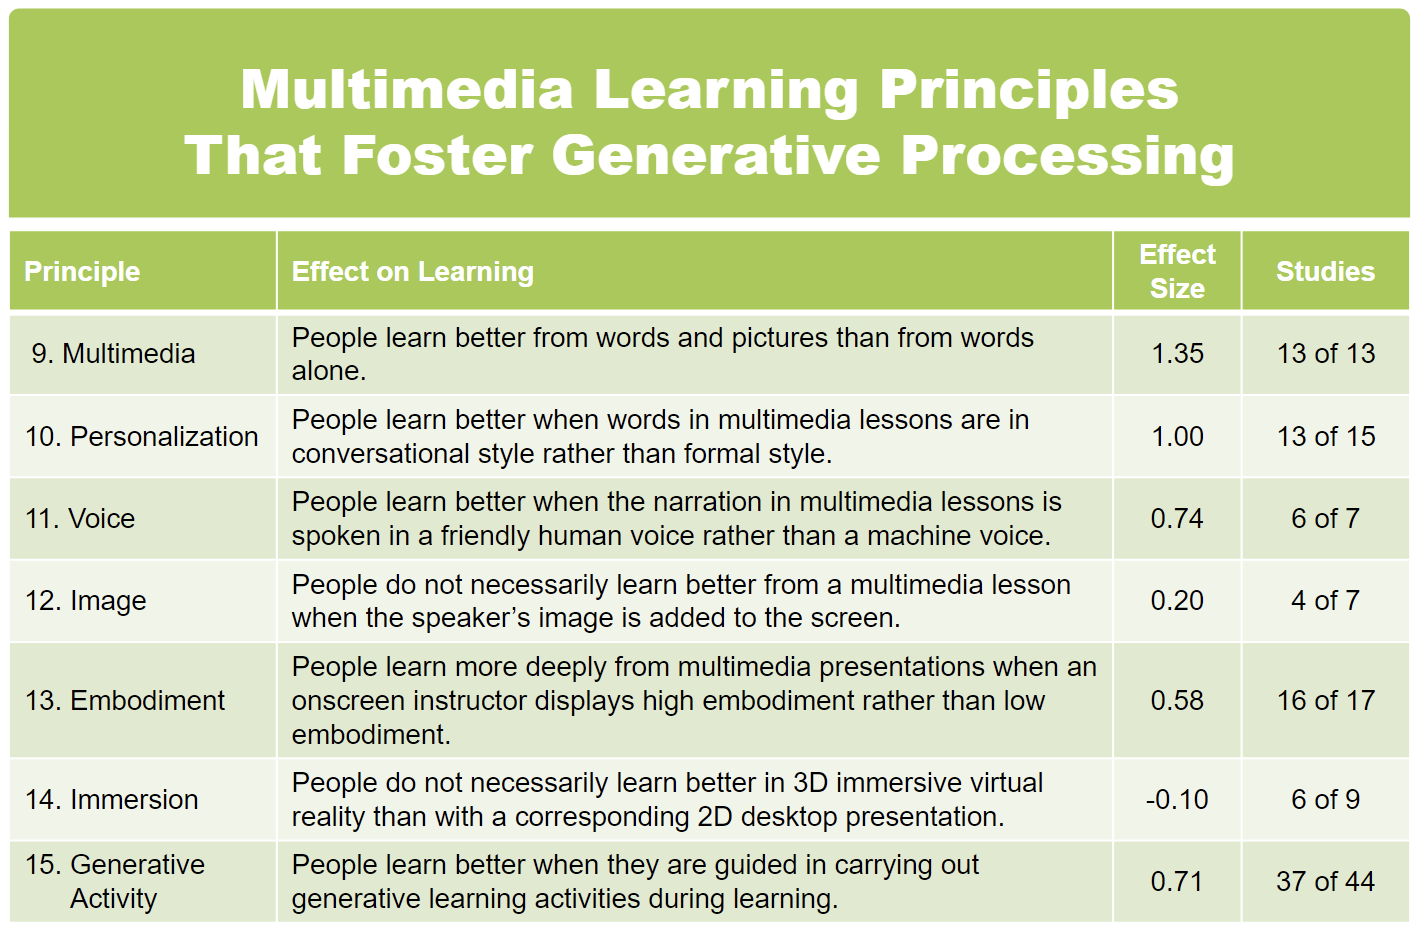 Multimedia Principles to Foster Generative Processing